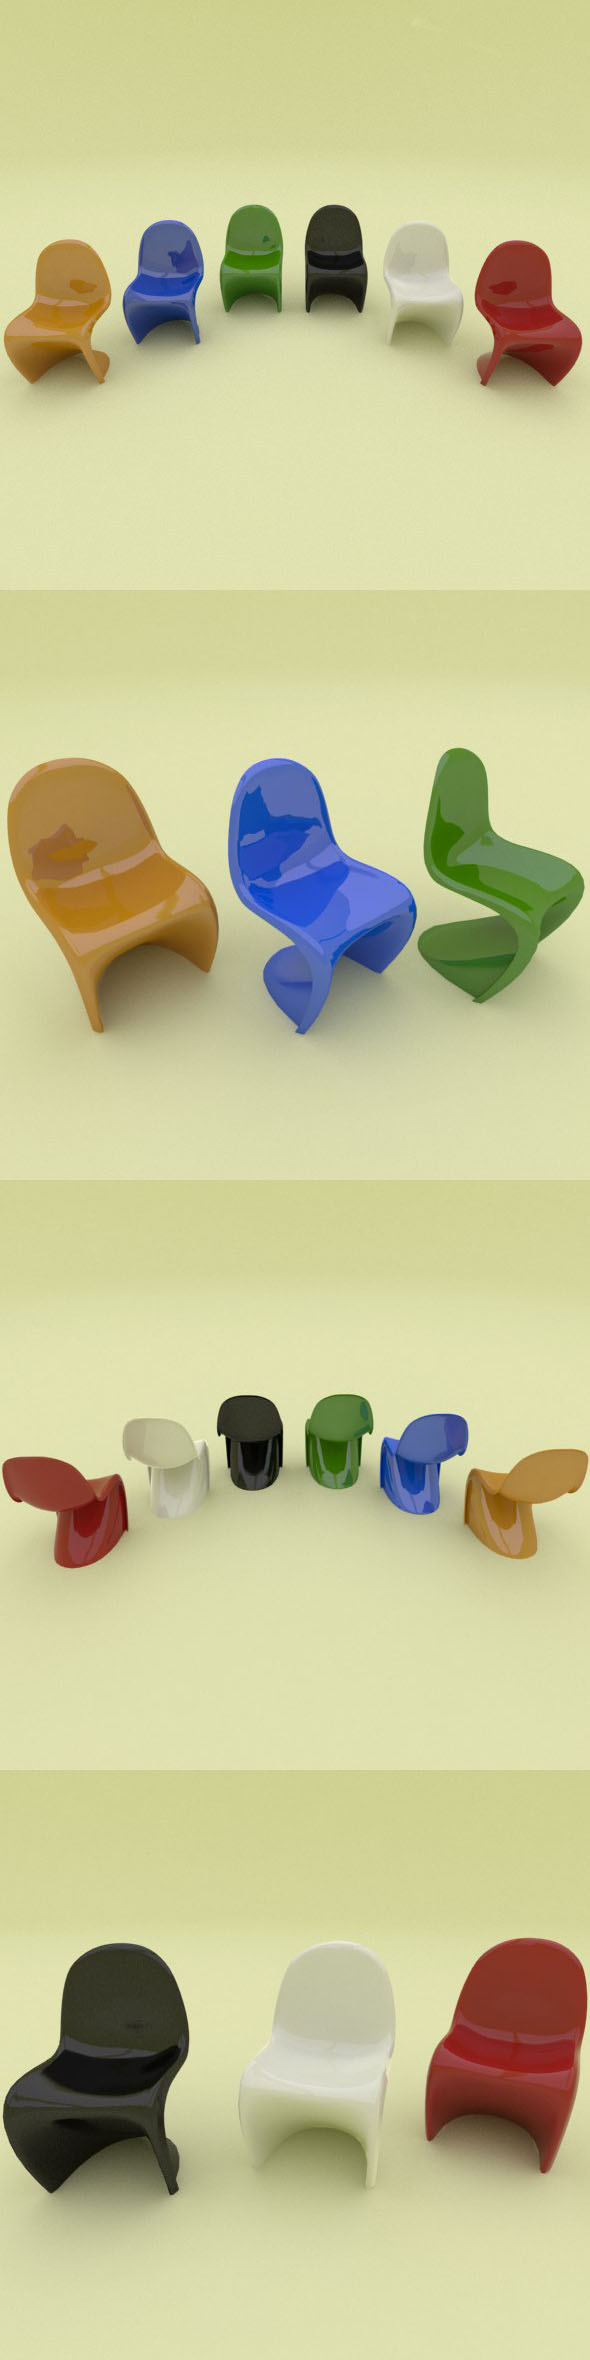 Panton plastic Chair - 3Docean 16576789